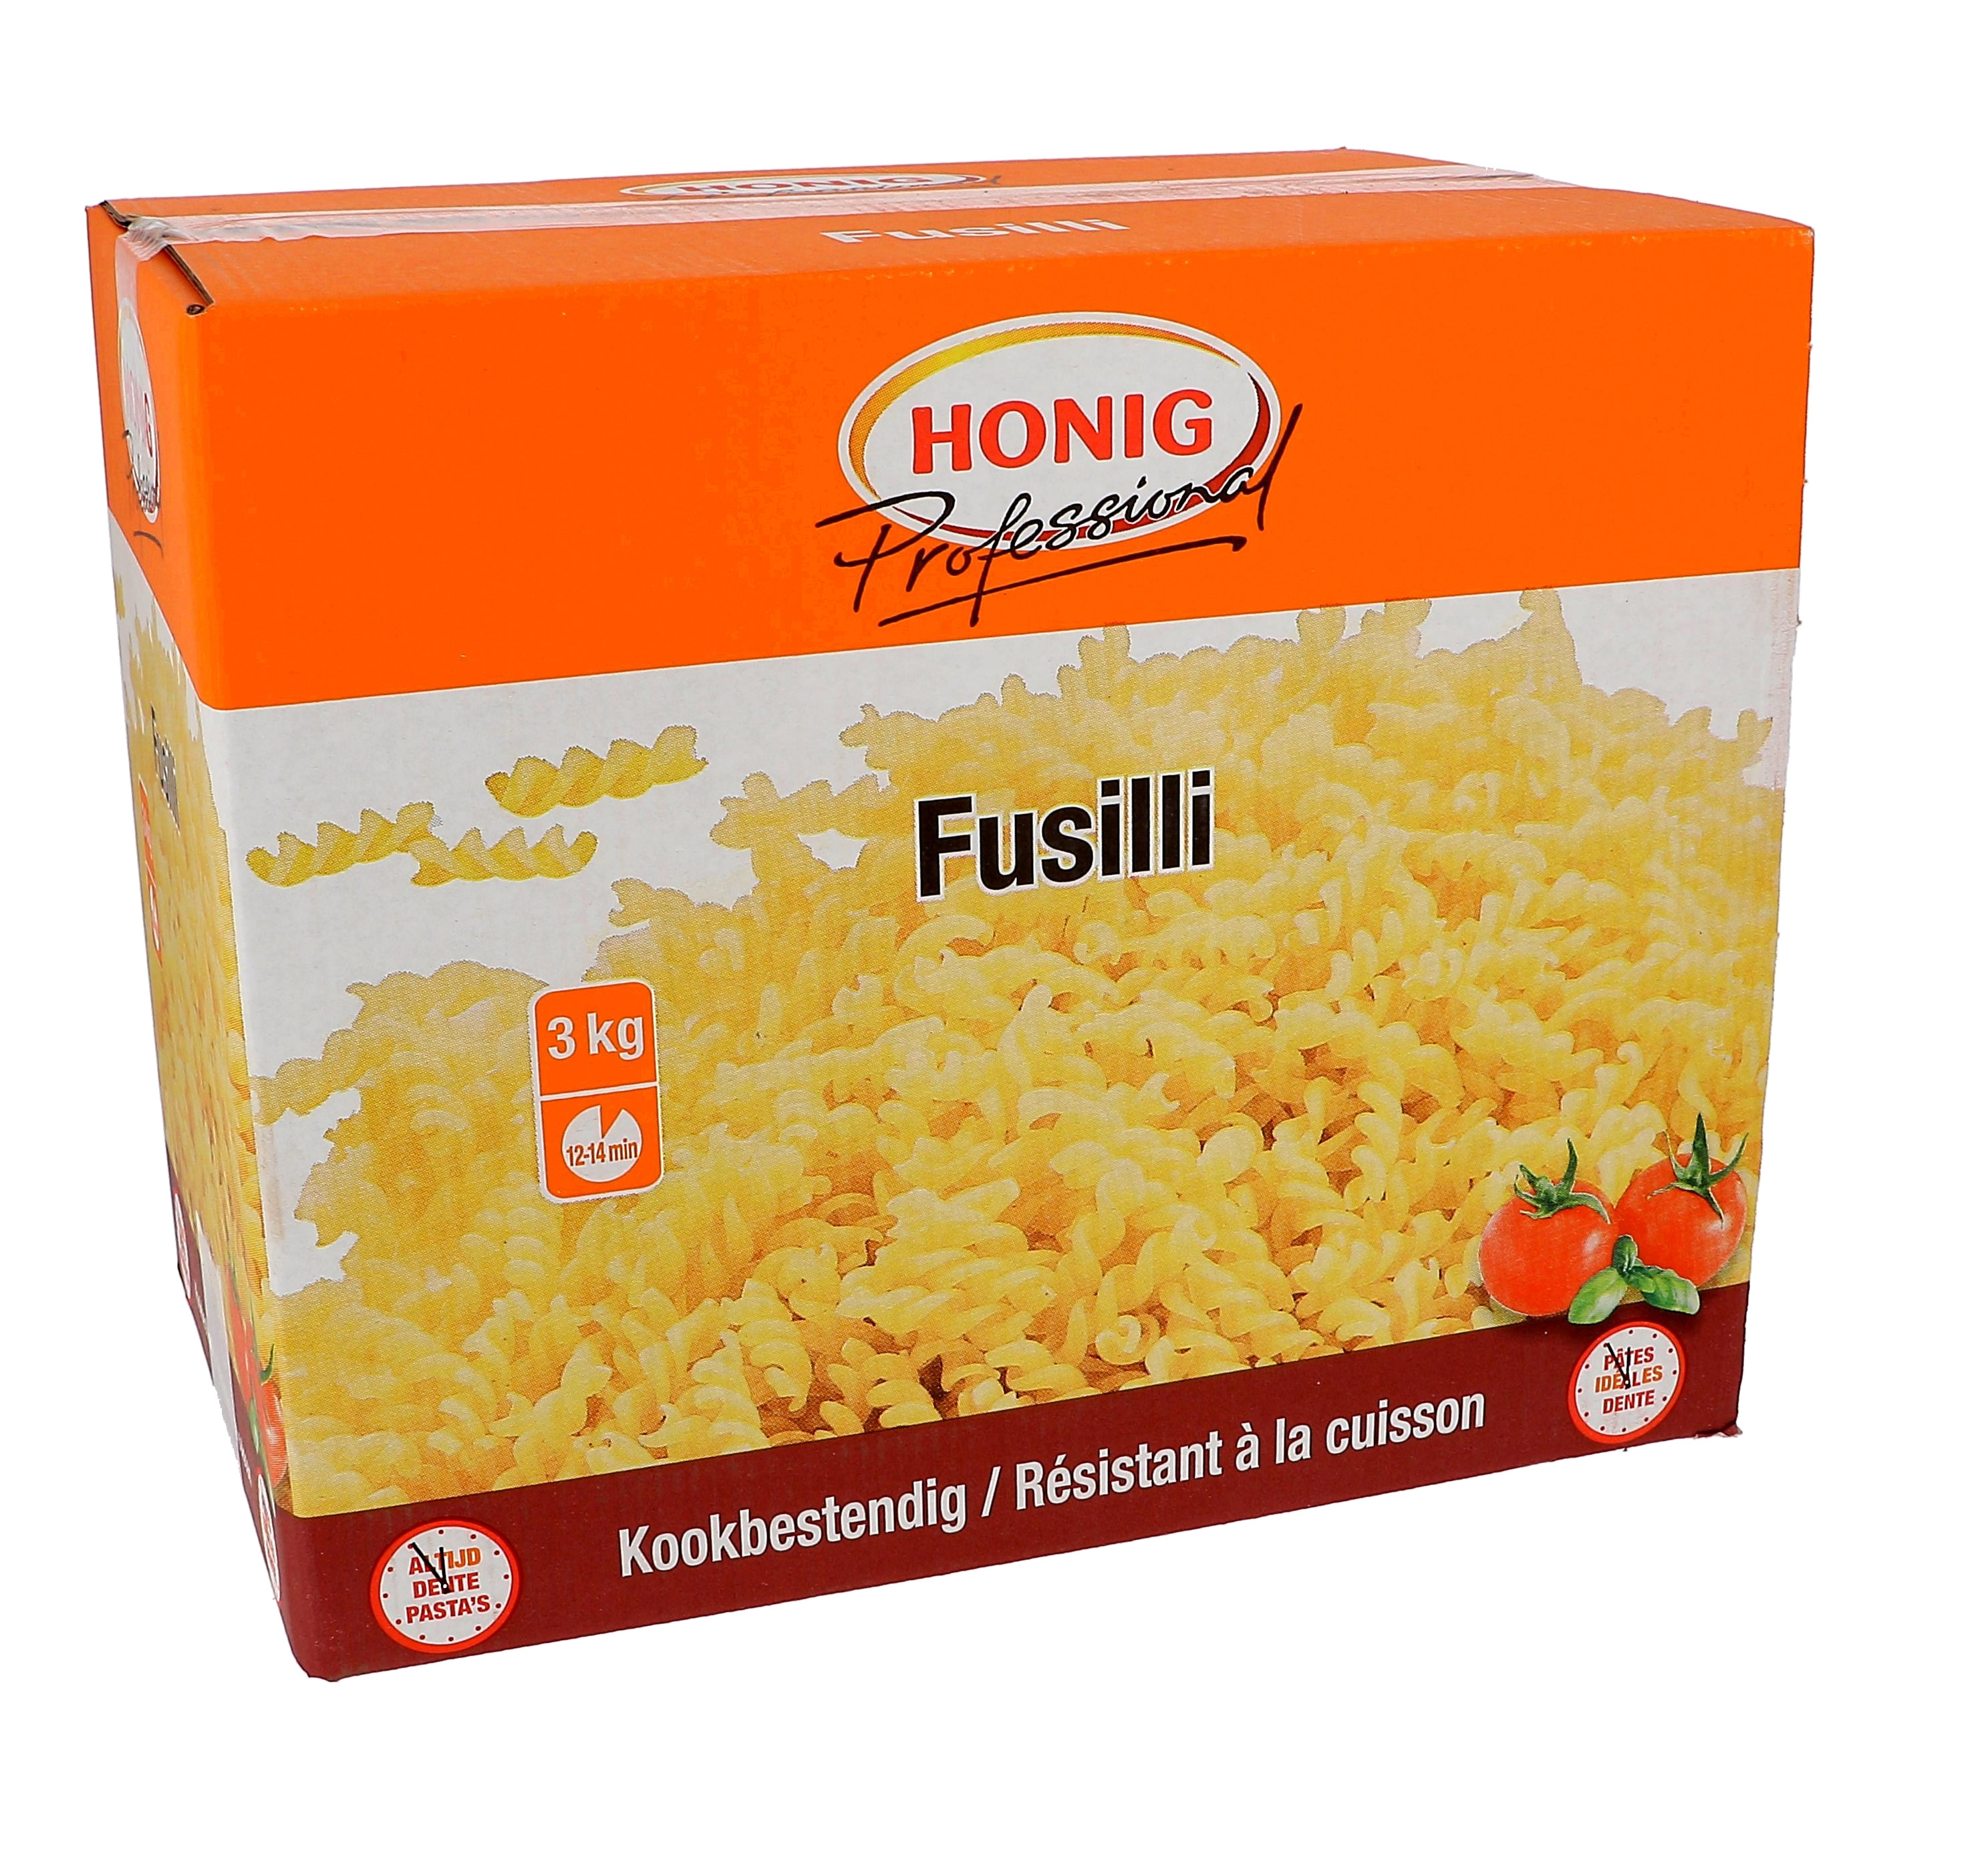 Honig fusilli pasta naturel 3kg Professional kookbestendig